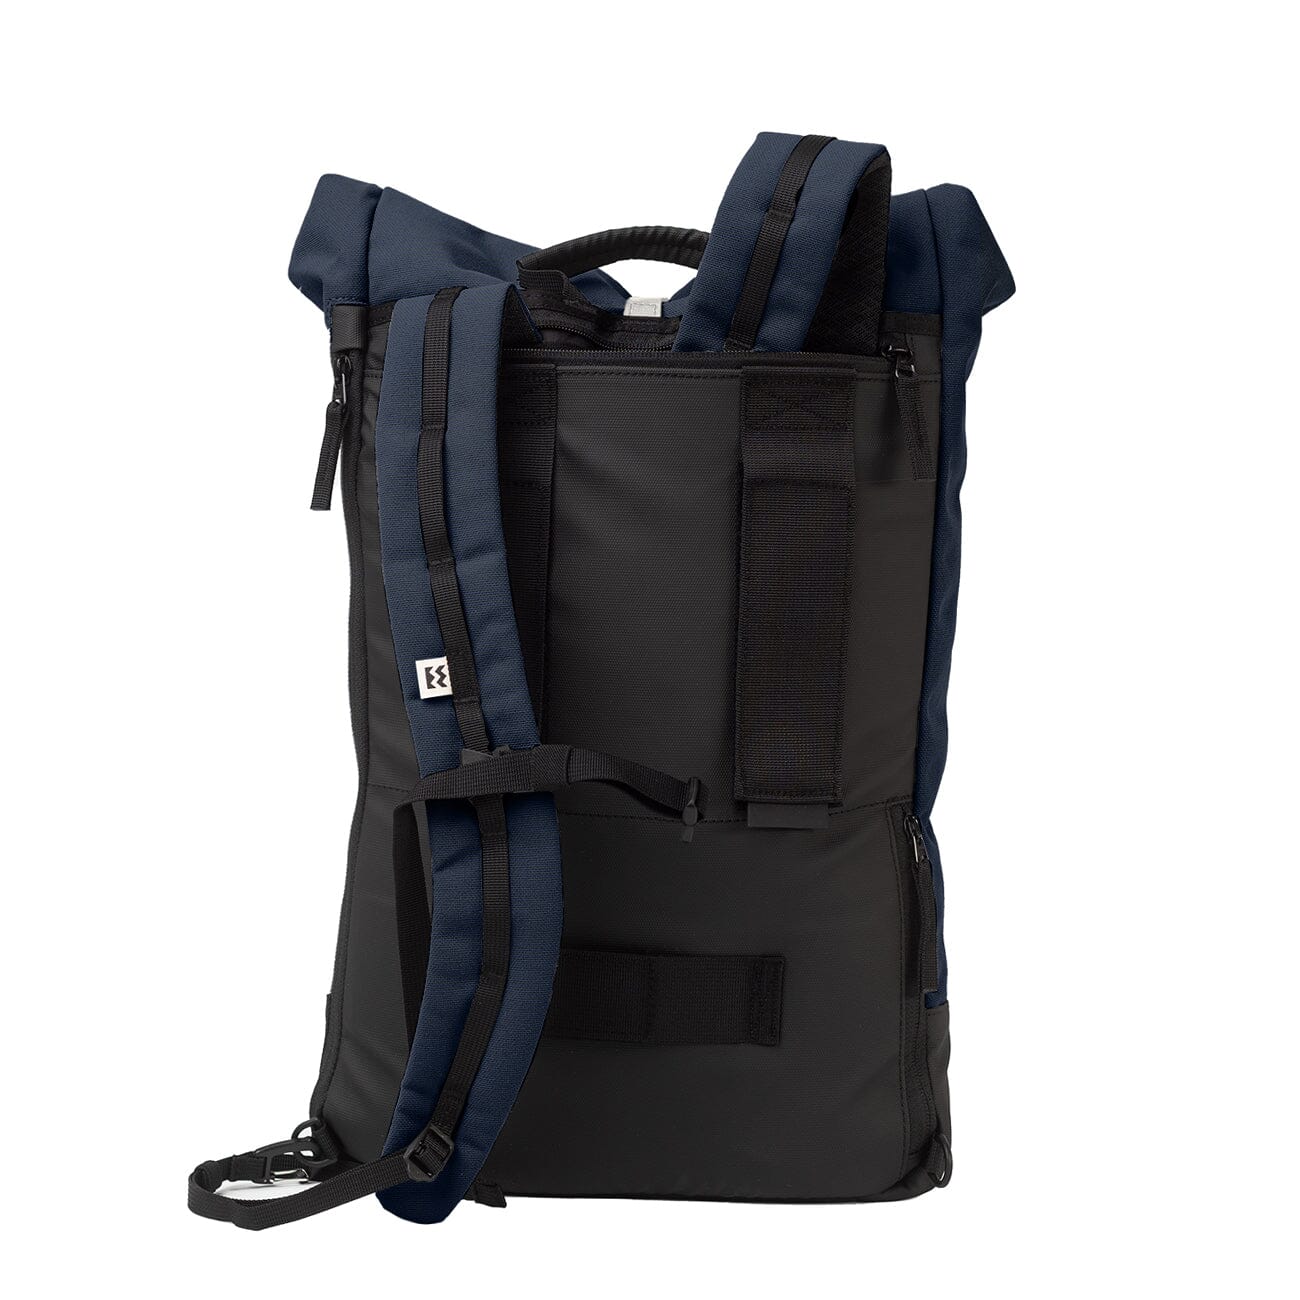 navy blue eco friendly backpack mero mero breathable mesh back pannel adjustable shoulder straps back view